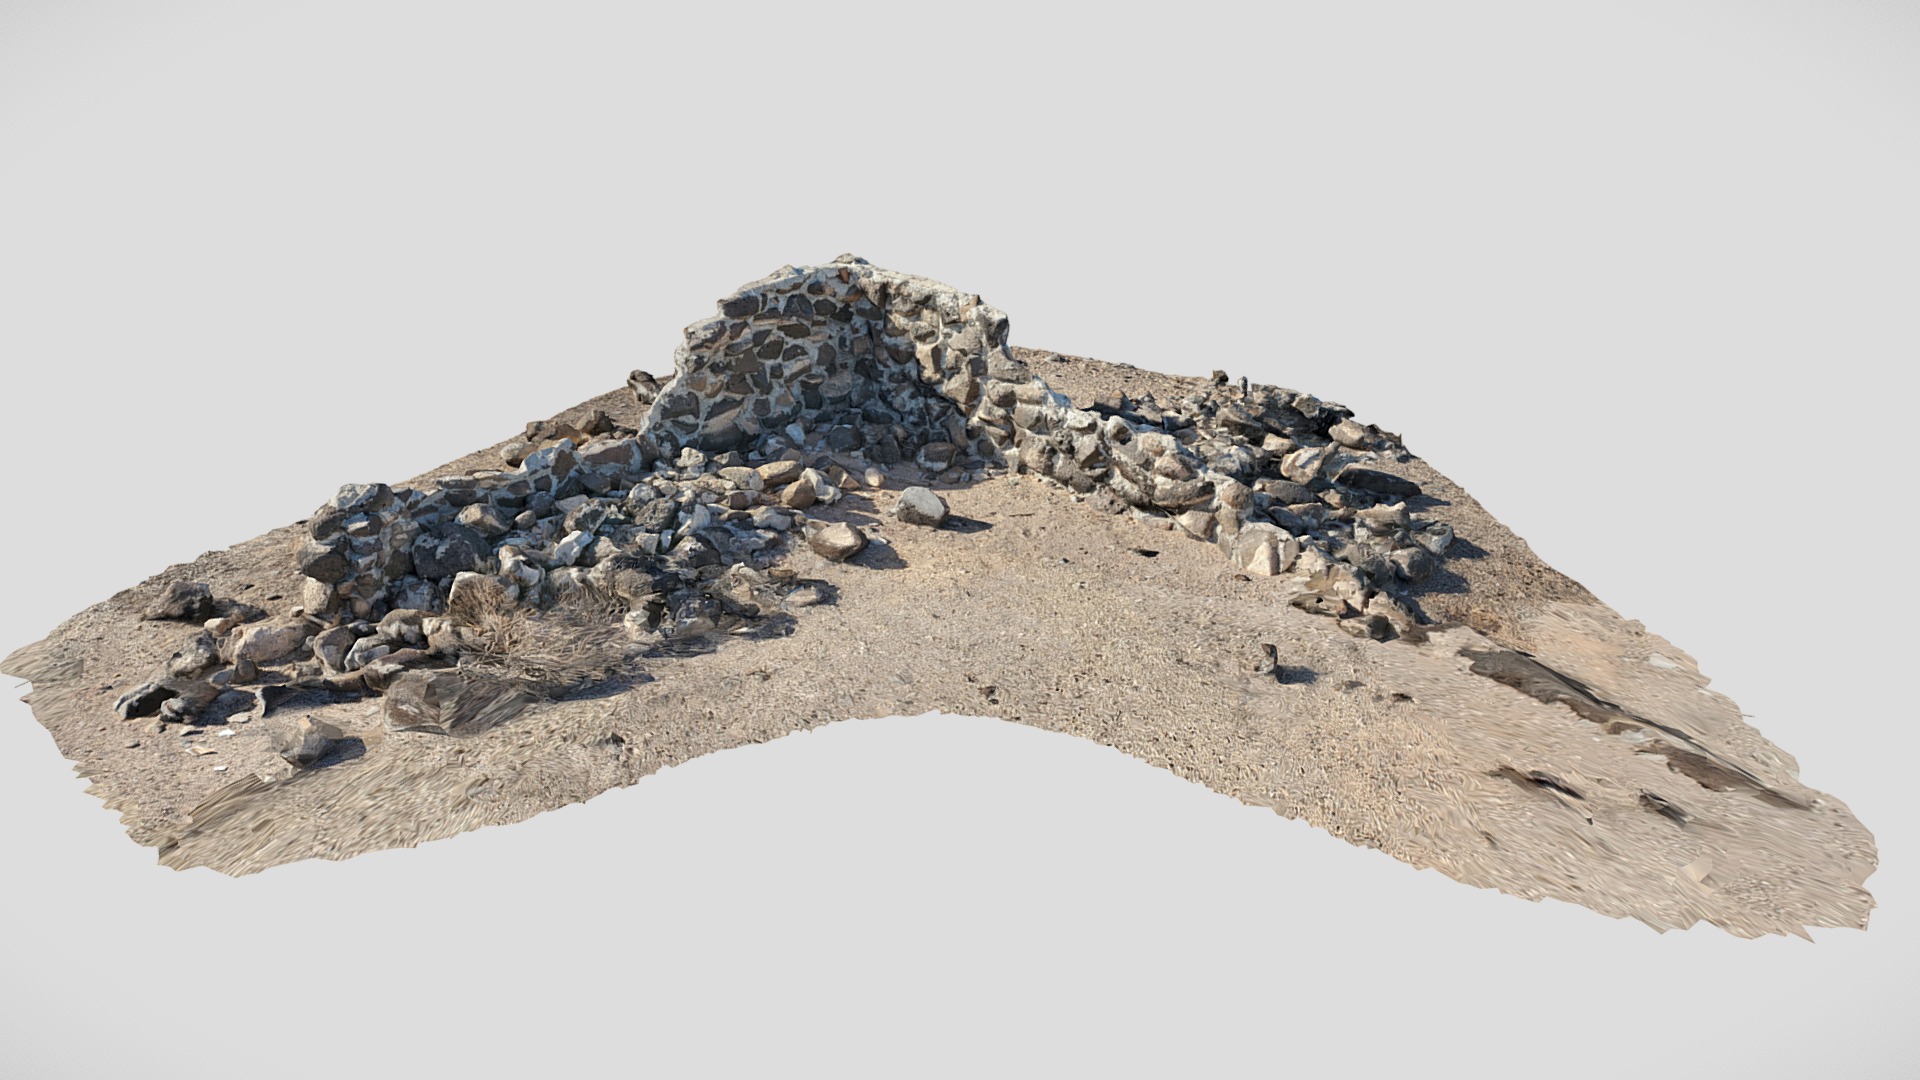 3D model Old Rock Wall In The California Desert - This is a 3D model of the Old Rock Wall In The California Desert. The 3D model is about a large pile of rocks on a sandy beach.